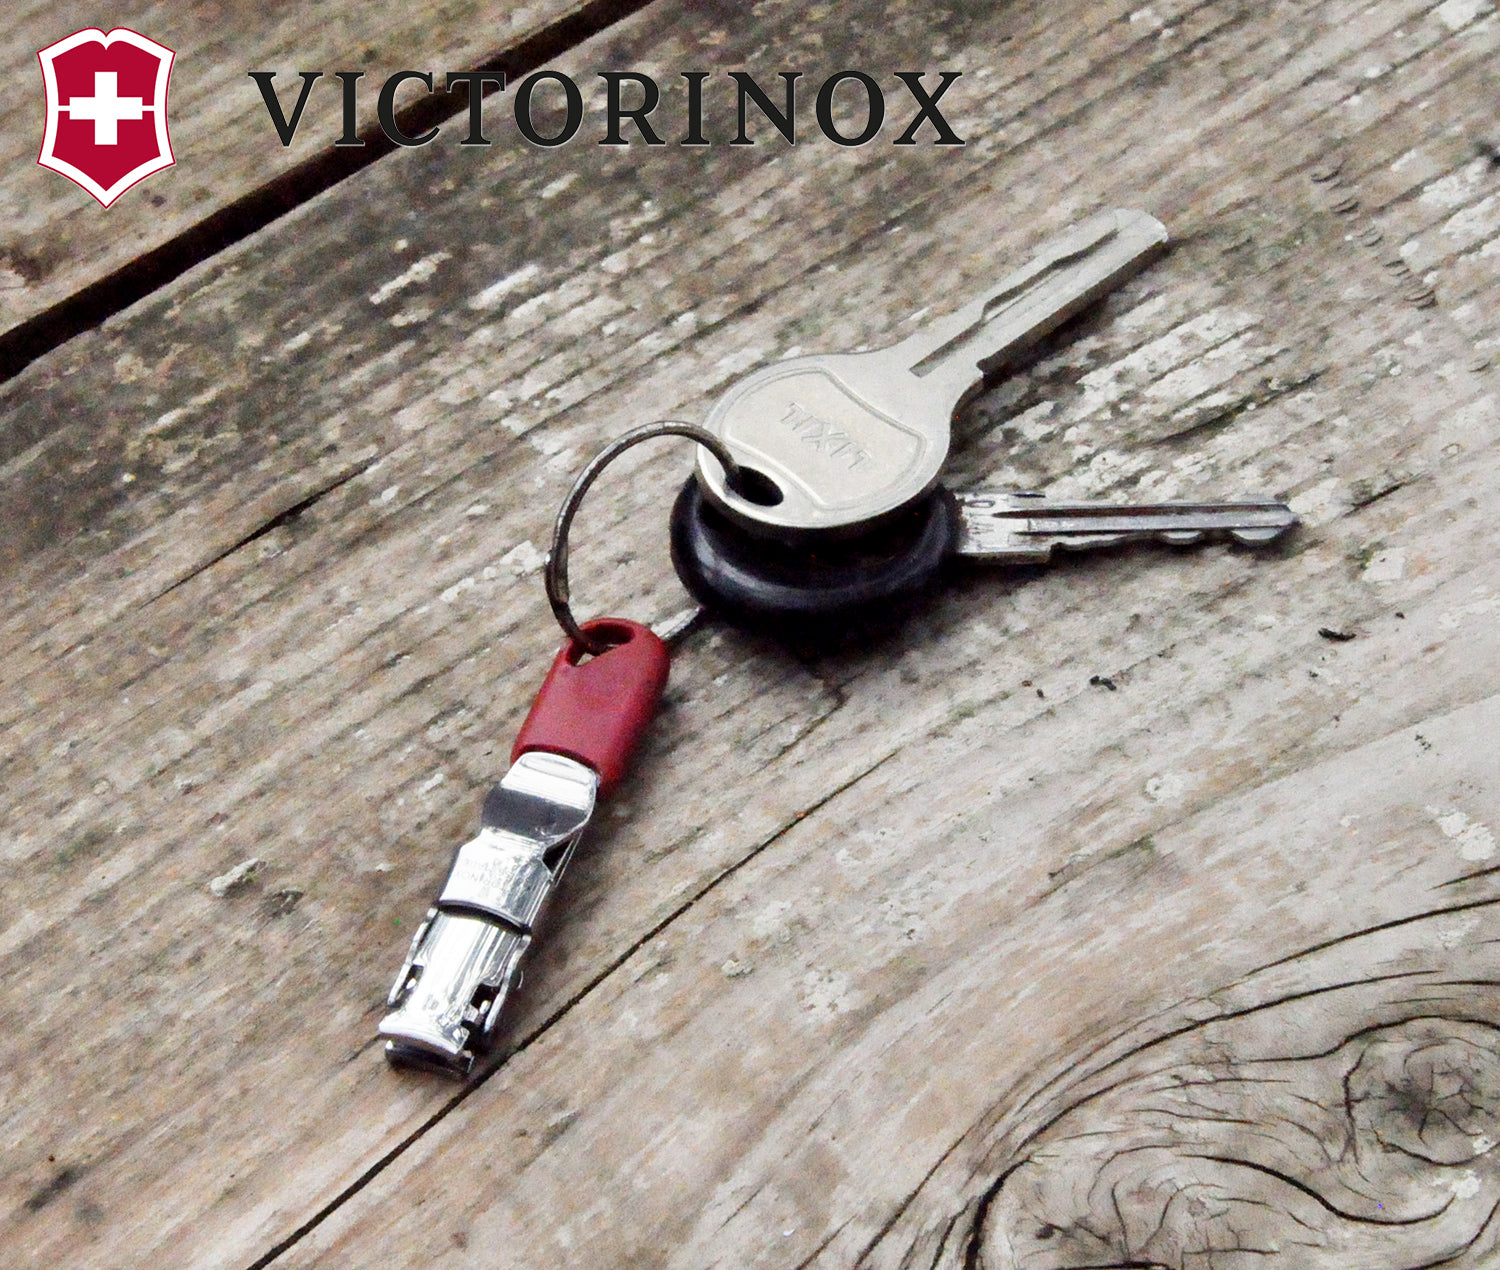 Victrinox Nail clipper / ビクトリノックス ネイルクリッパー